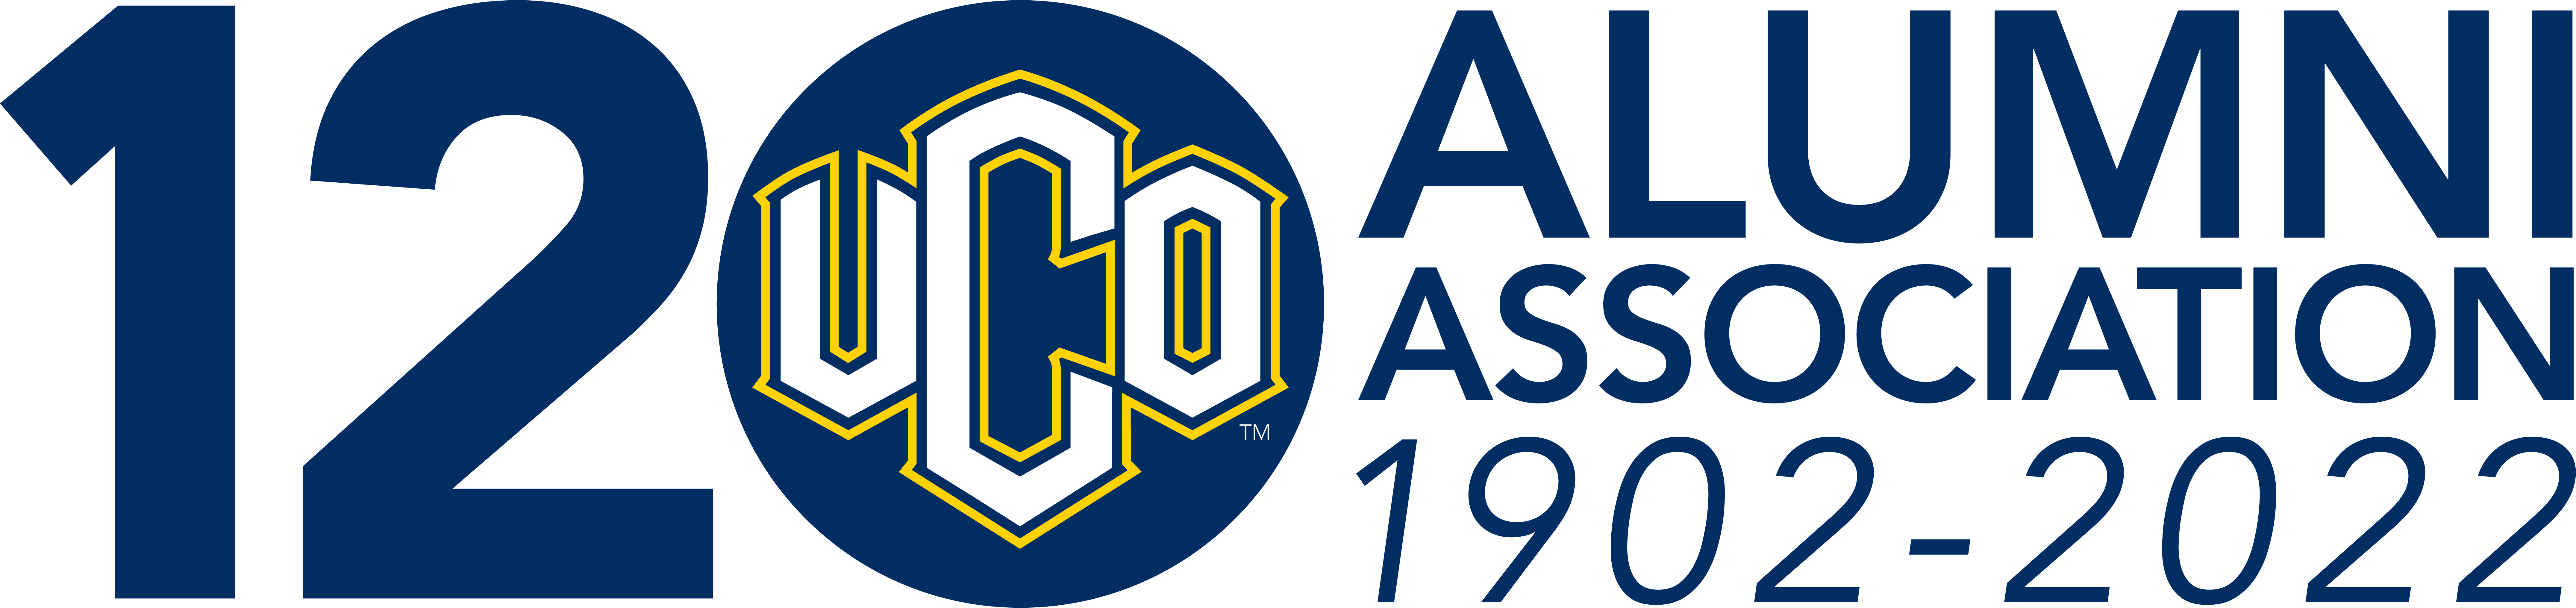 Alumni Association 120-year anniversary logo